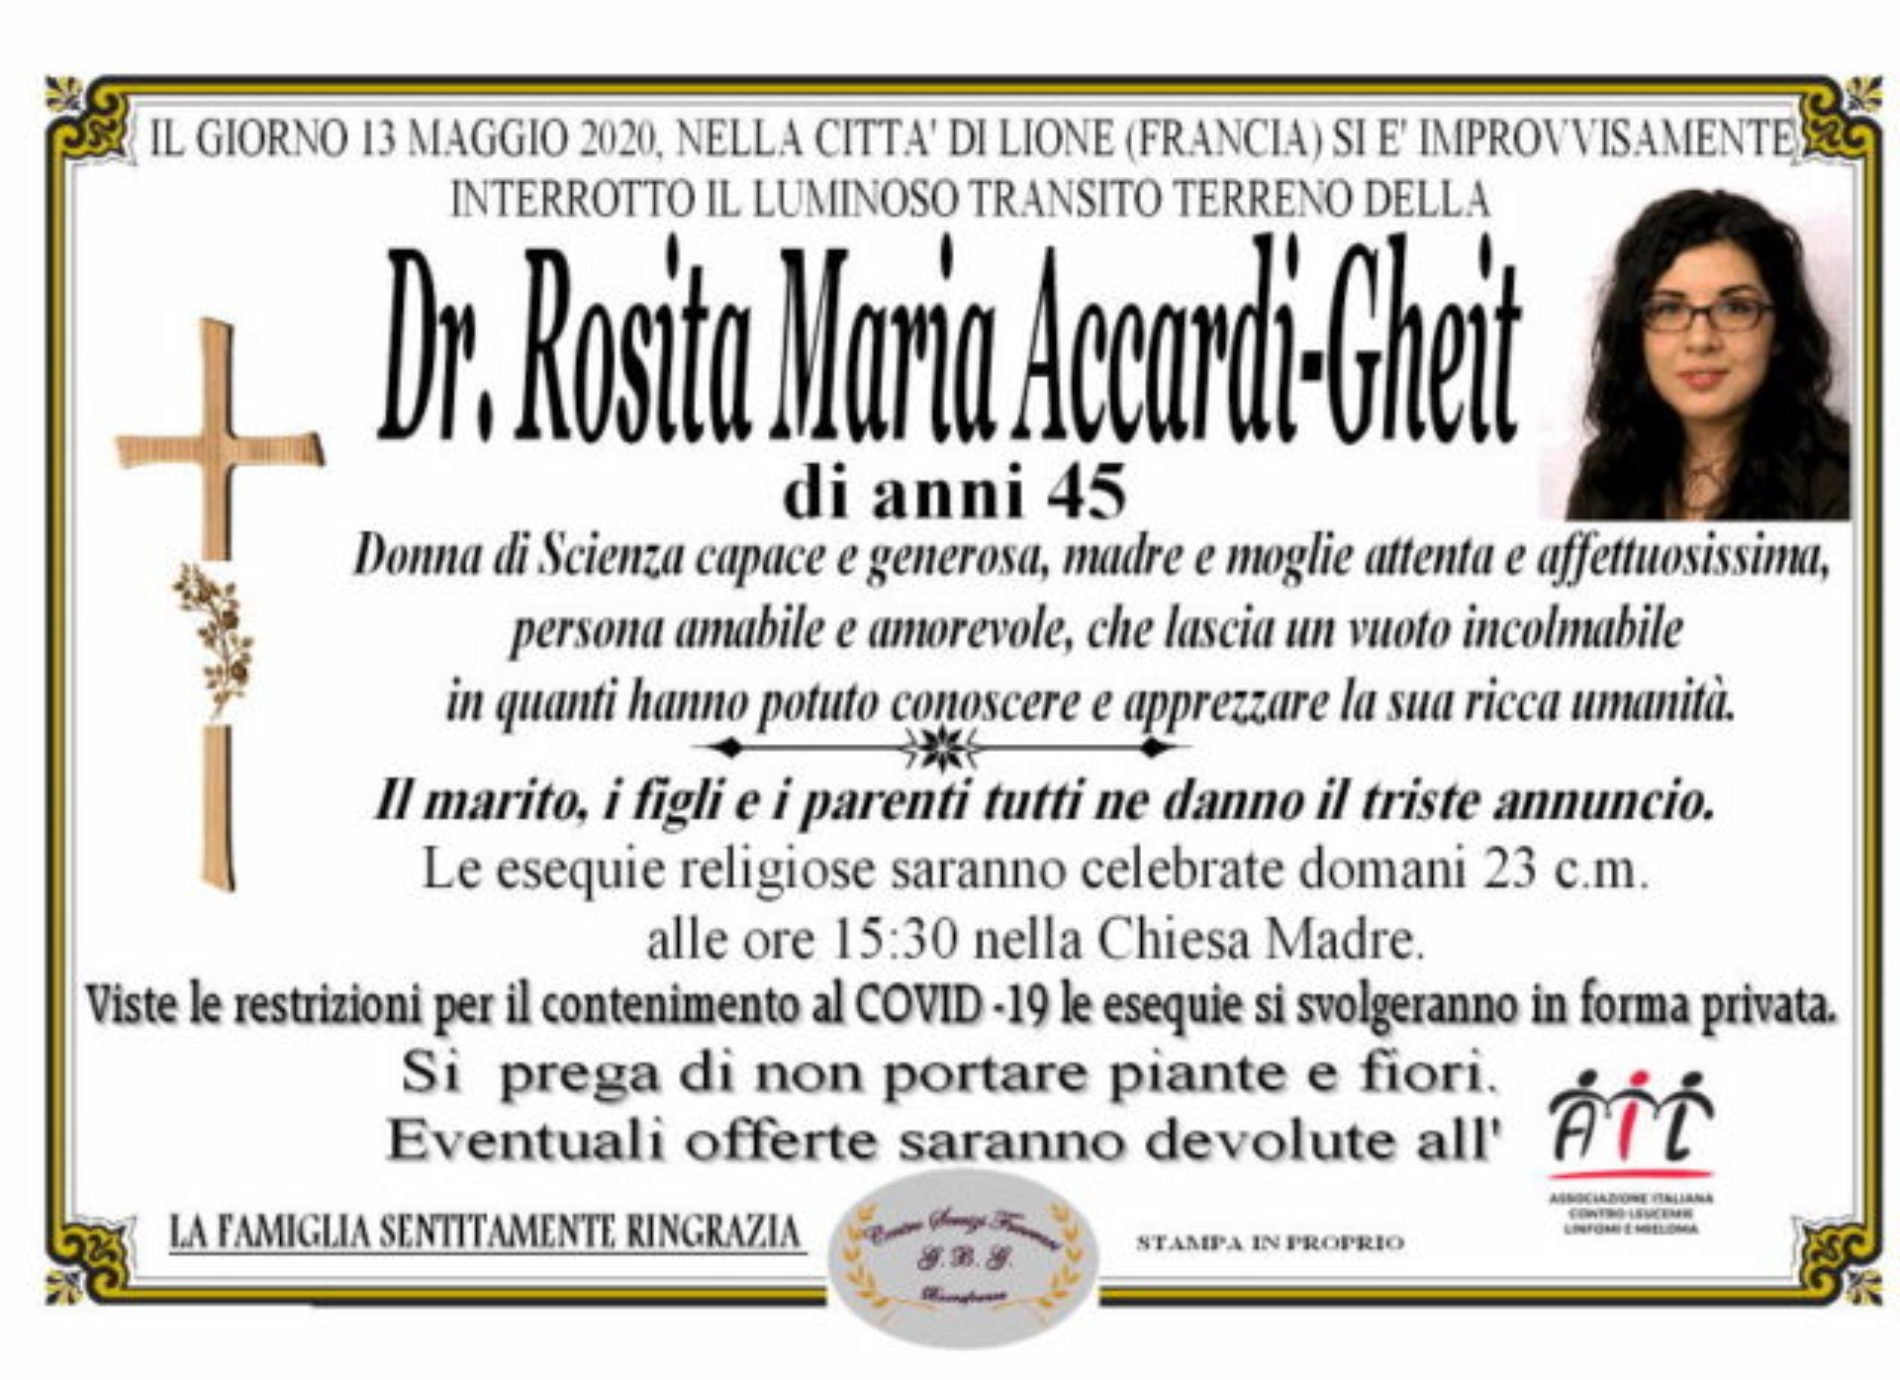 Annuncio Centro servizi funerari G.B.G. Dr. Rosita Accardi Gheit